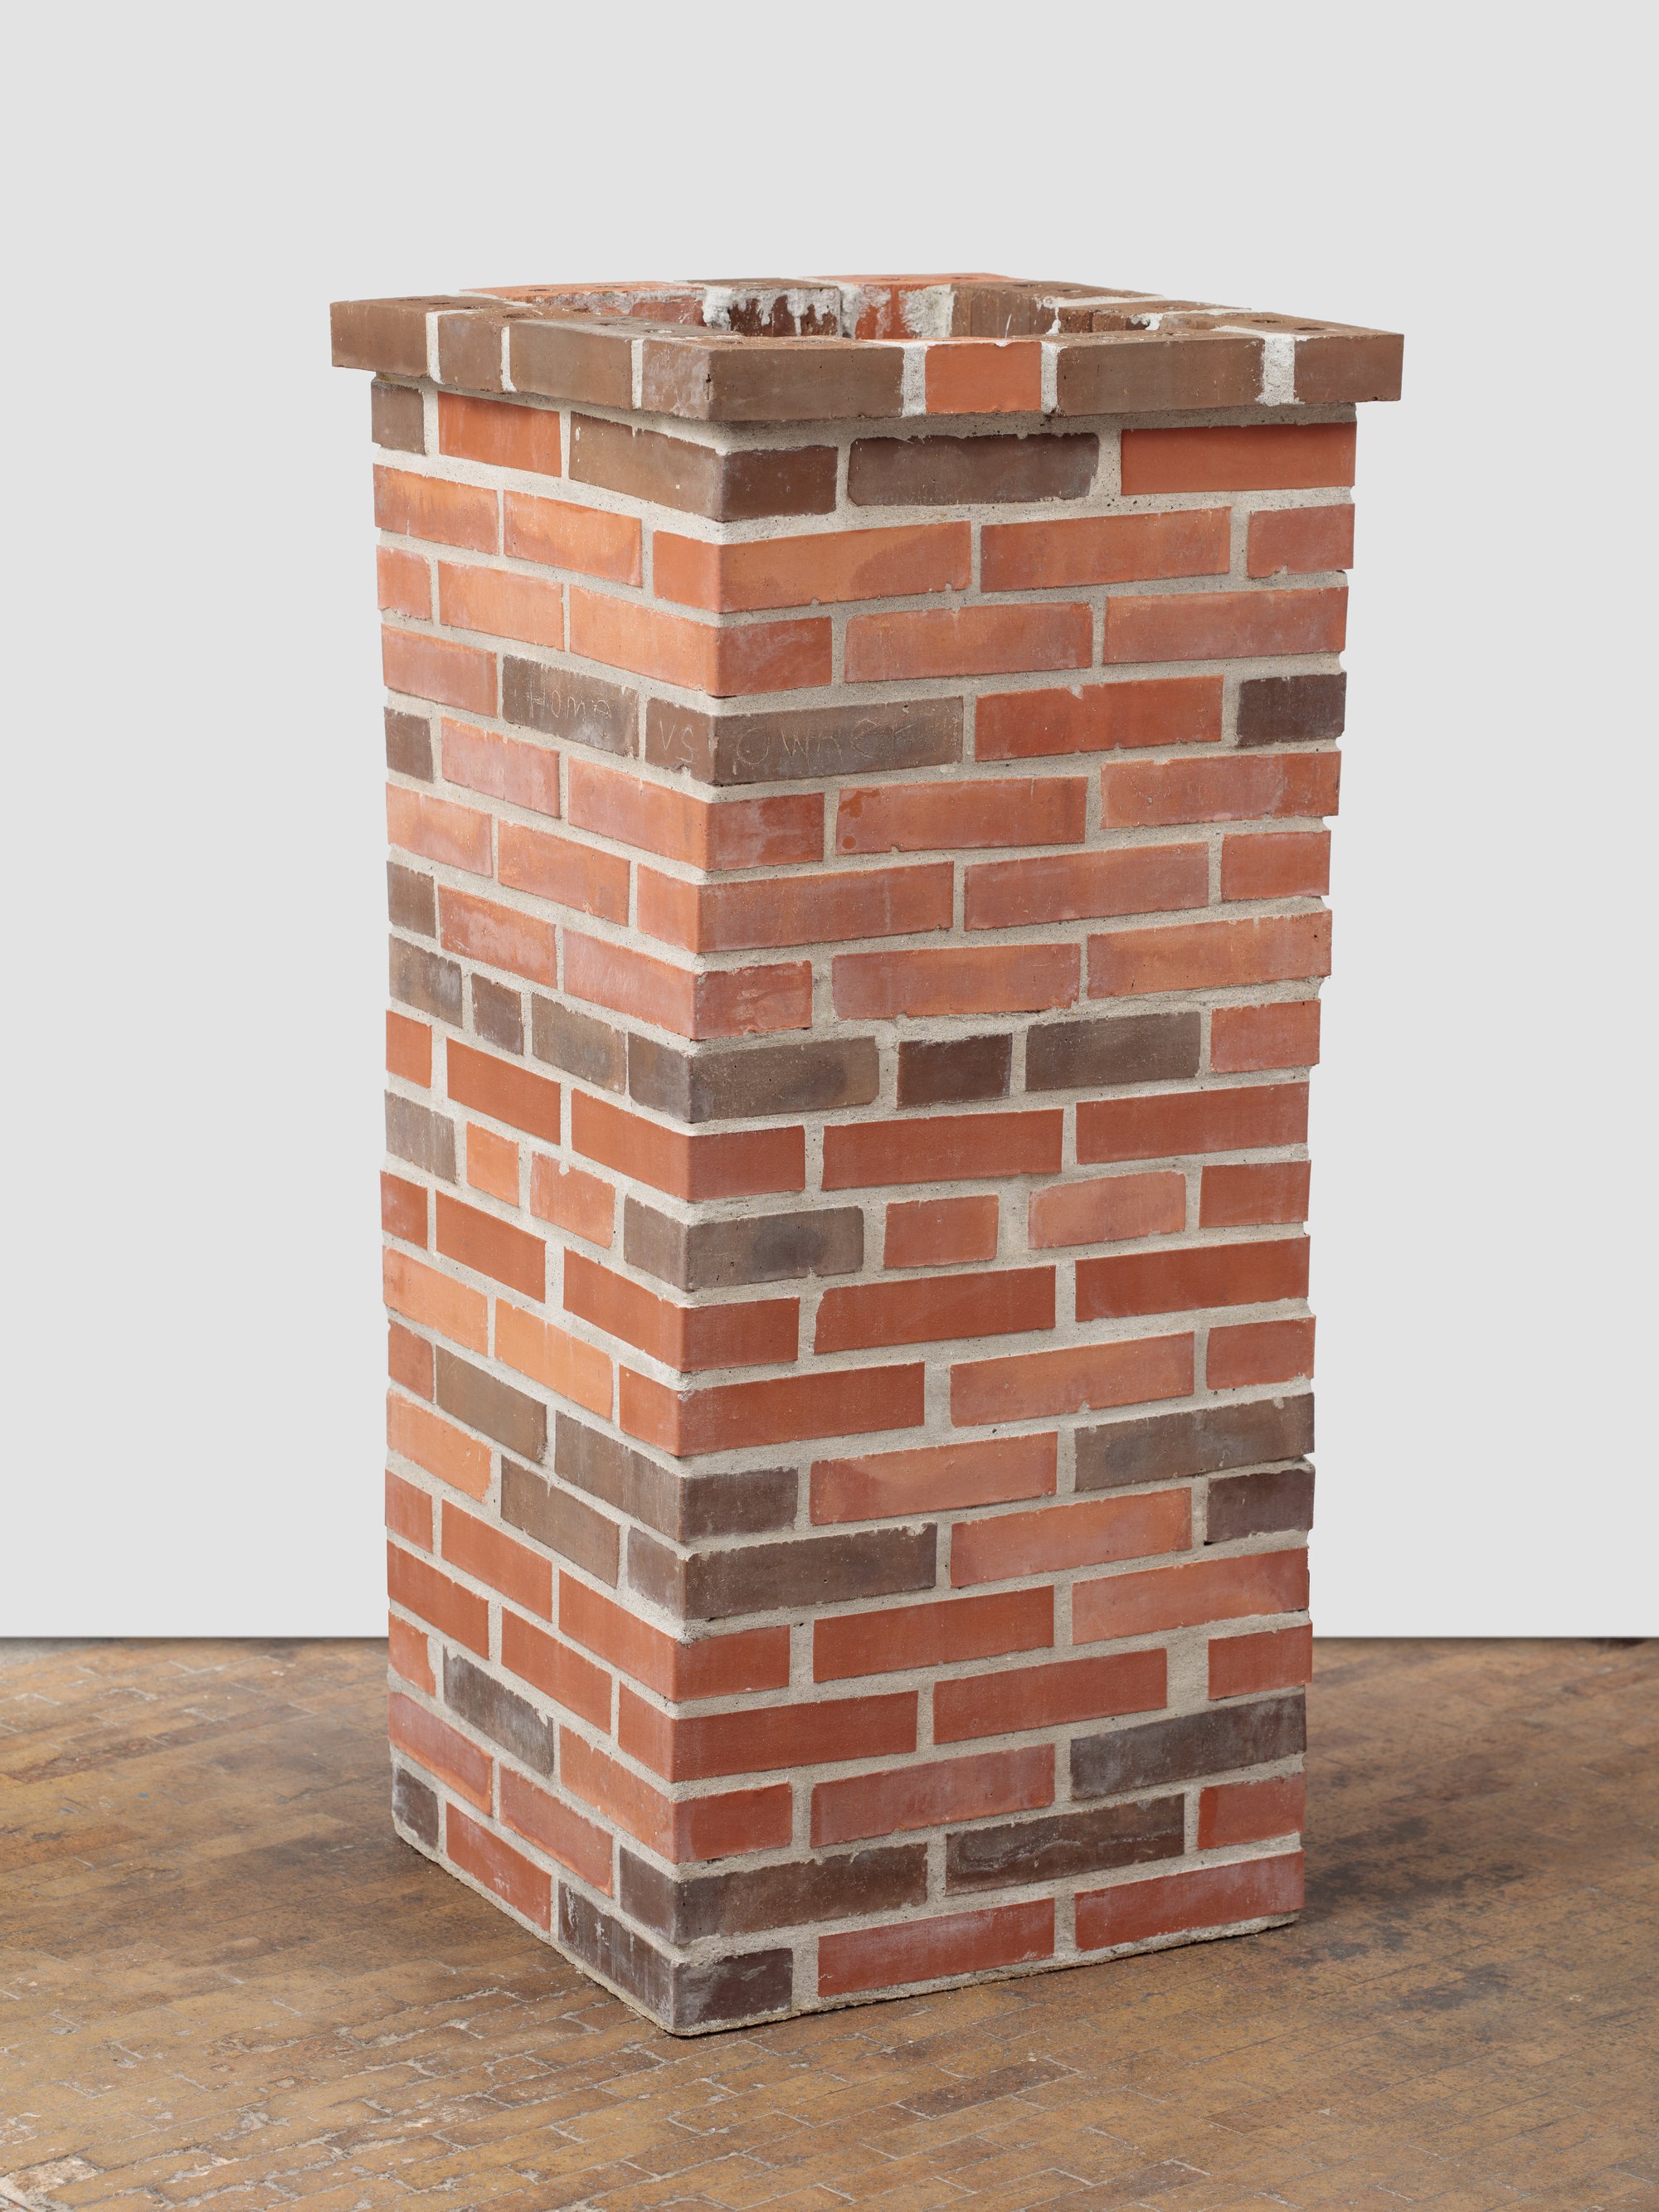 Sidsel Meineche Hansen, home vs owner 2, bricks and mortar, 60 x 60 x 120 cm (23 5/8 x 23 5/8 x 47 1/4 in), 2020